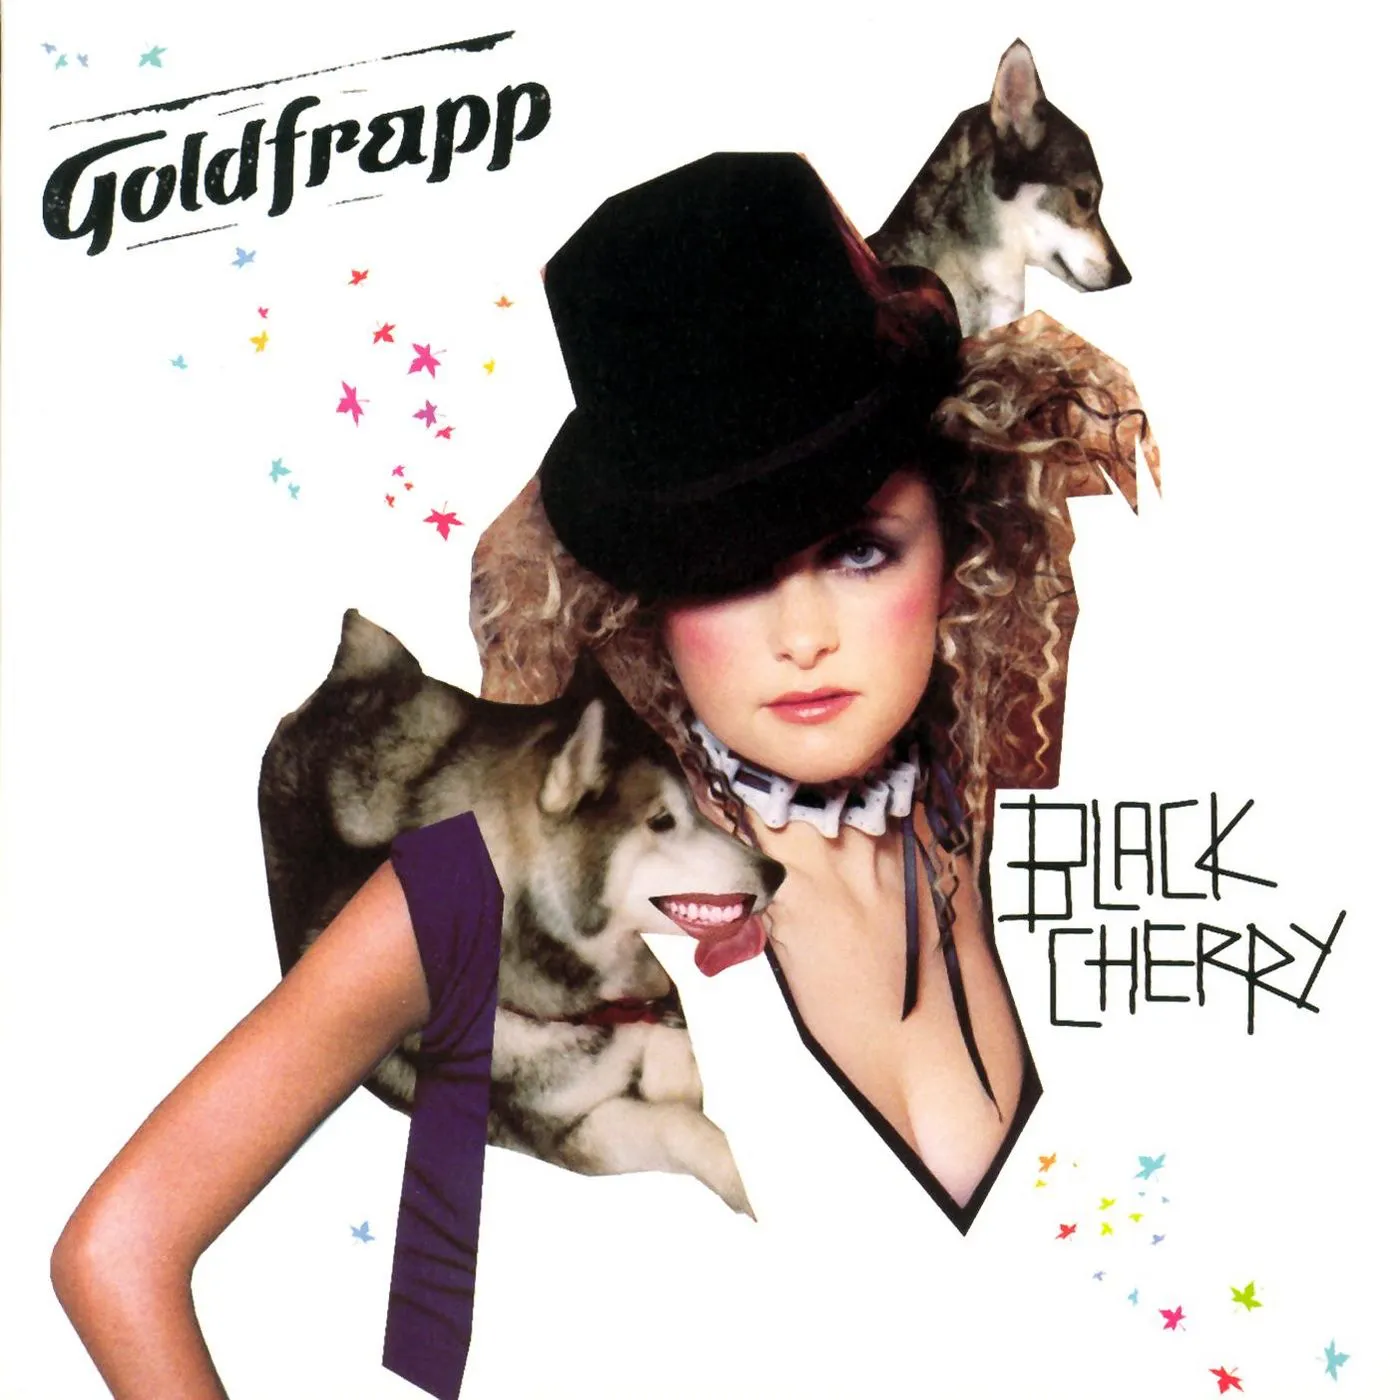 Goldfrapp - Black Cherry artwork